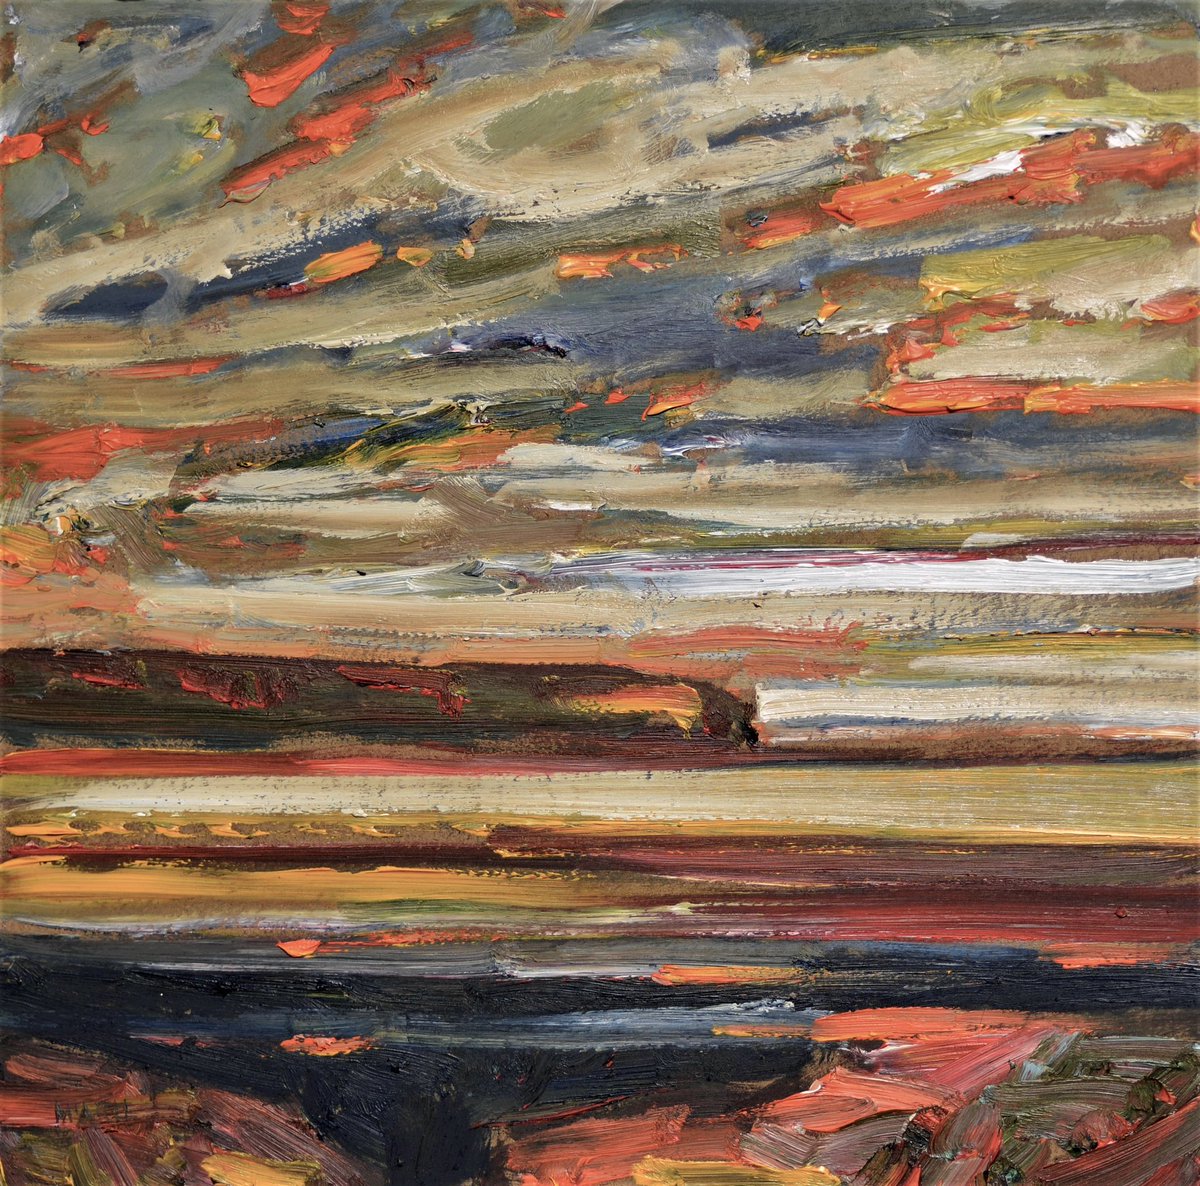 Parry Island 
Georgian Bay
10”x10” oil on panel 
640.00 unframed 
Now available #artsale #ParrySound